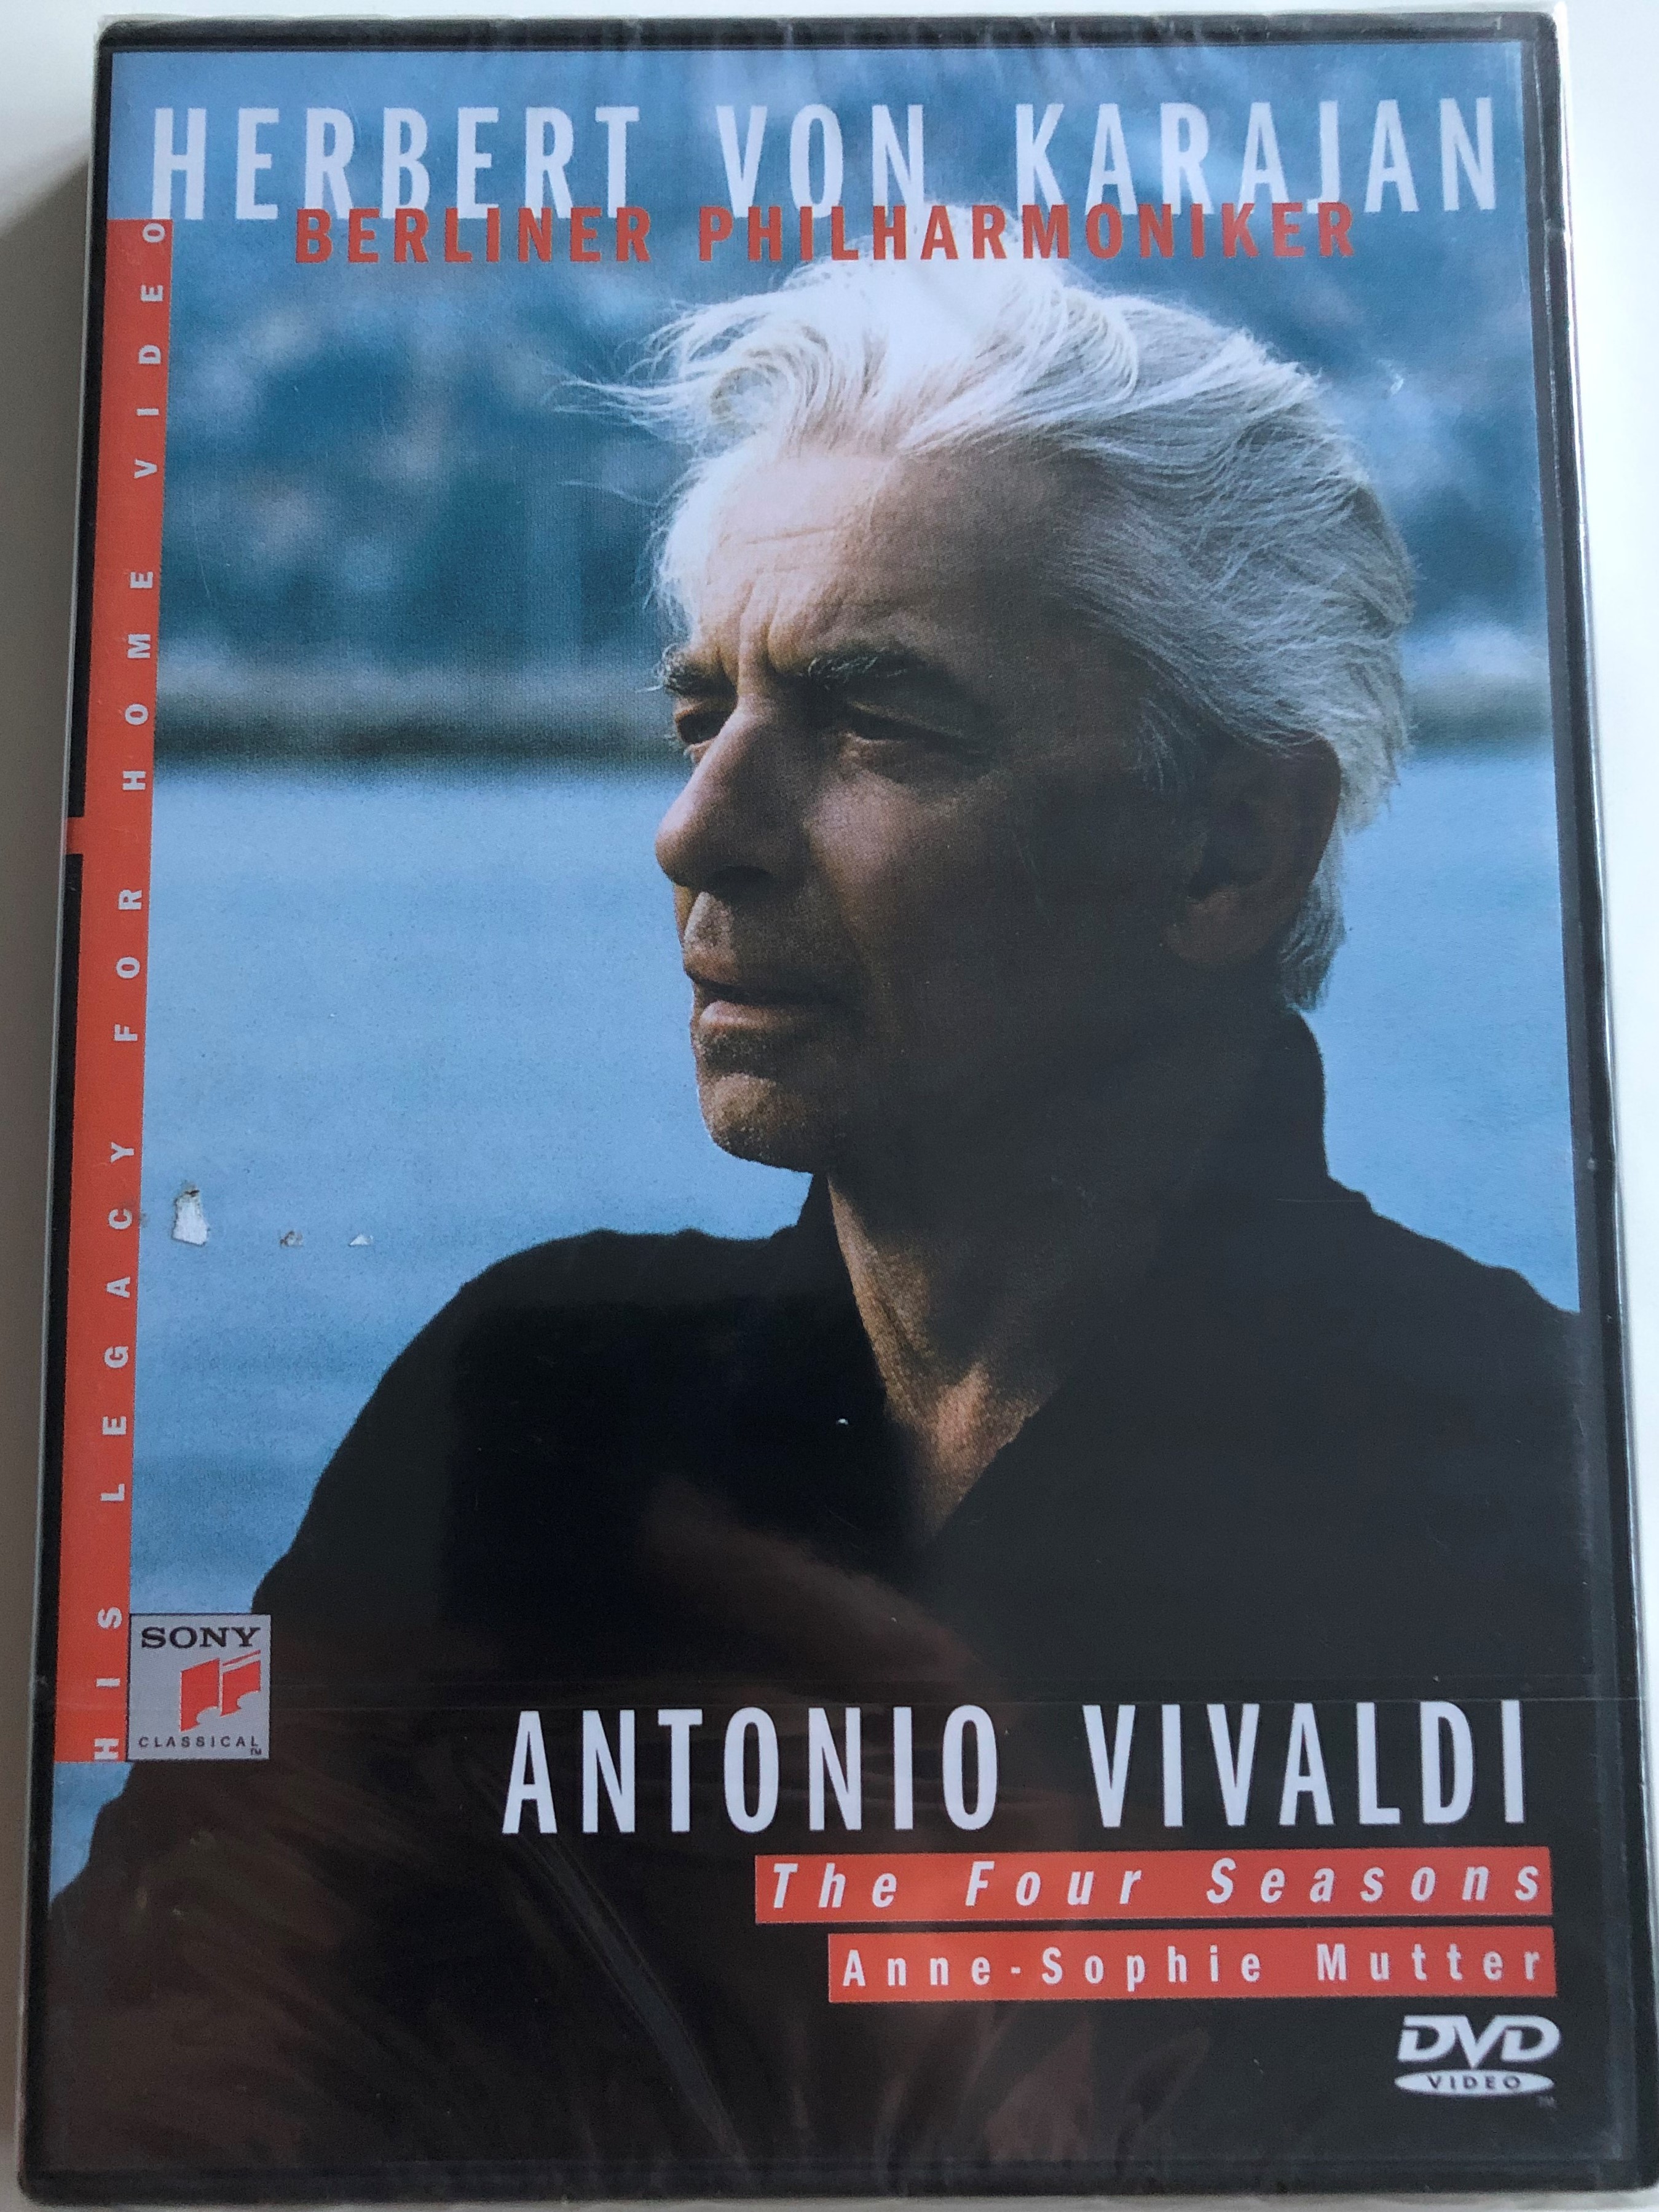 herbert-von-karajan-berliner-philharmoniker-antonio-vivaldi-the-four-seasons-anne-sophie-mutter-violin-sony-music-dvd-1998-svd-46380-1-.jpg